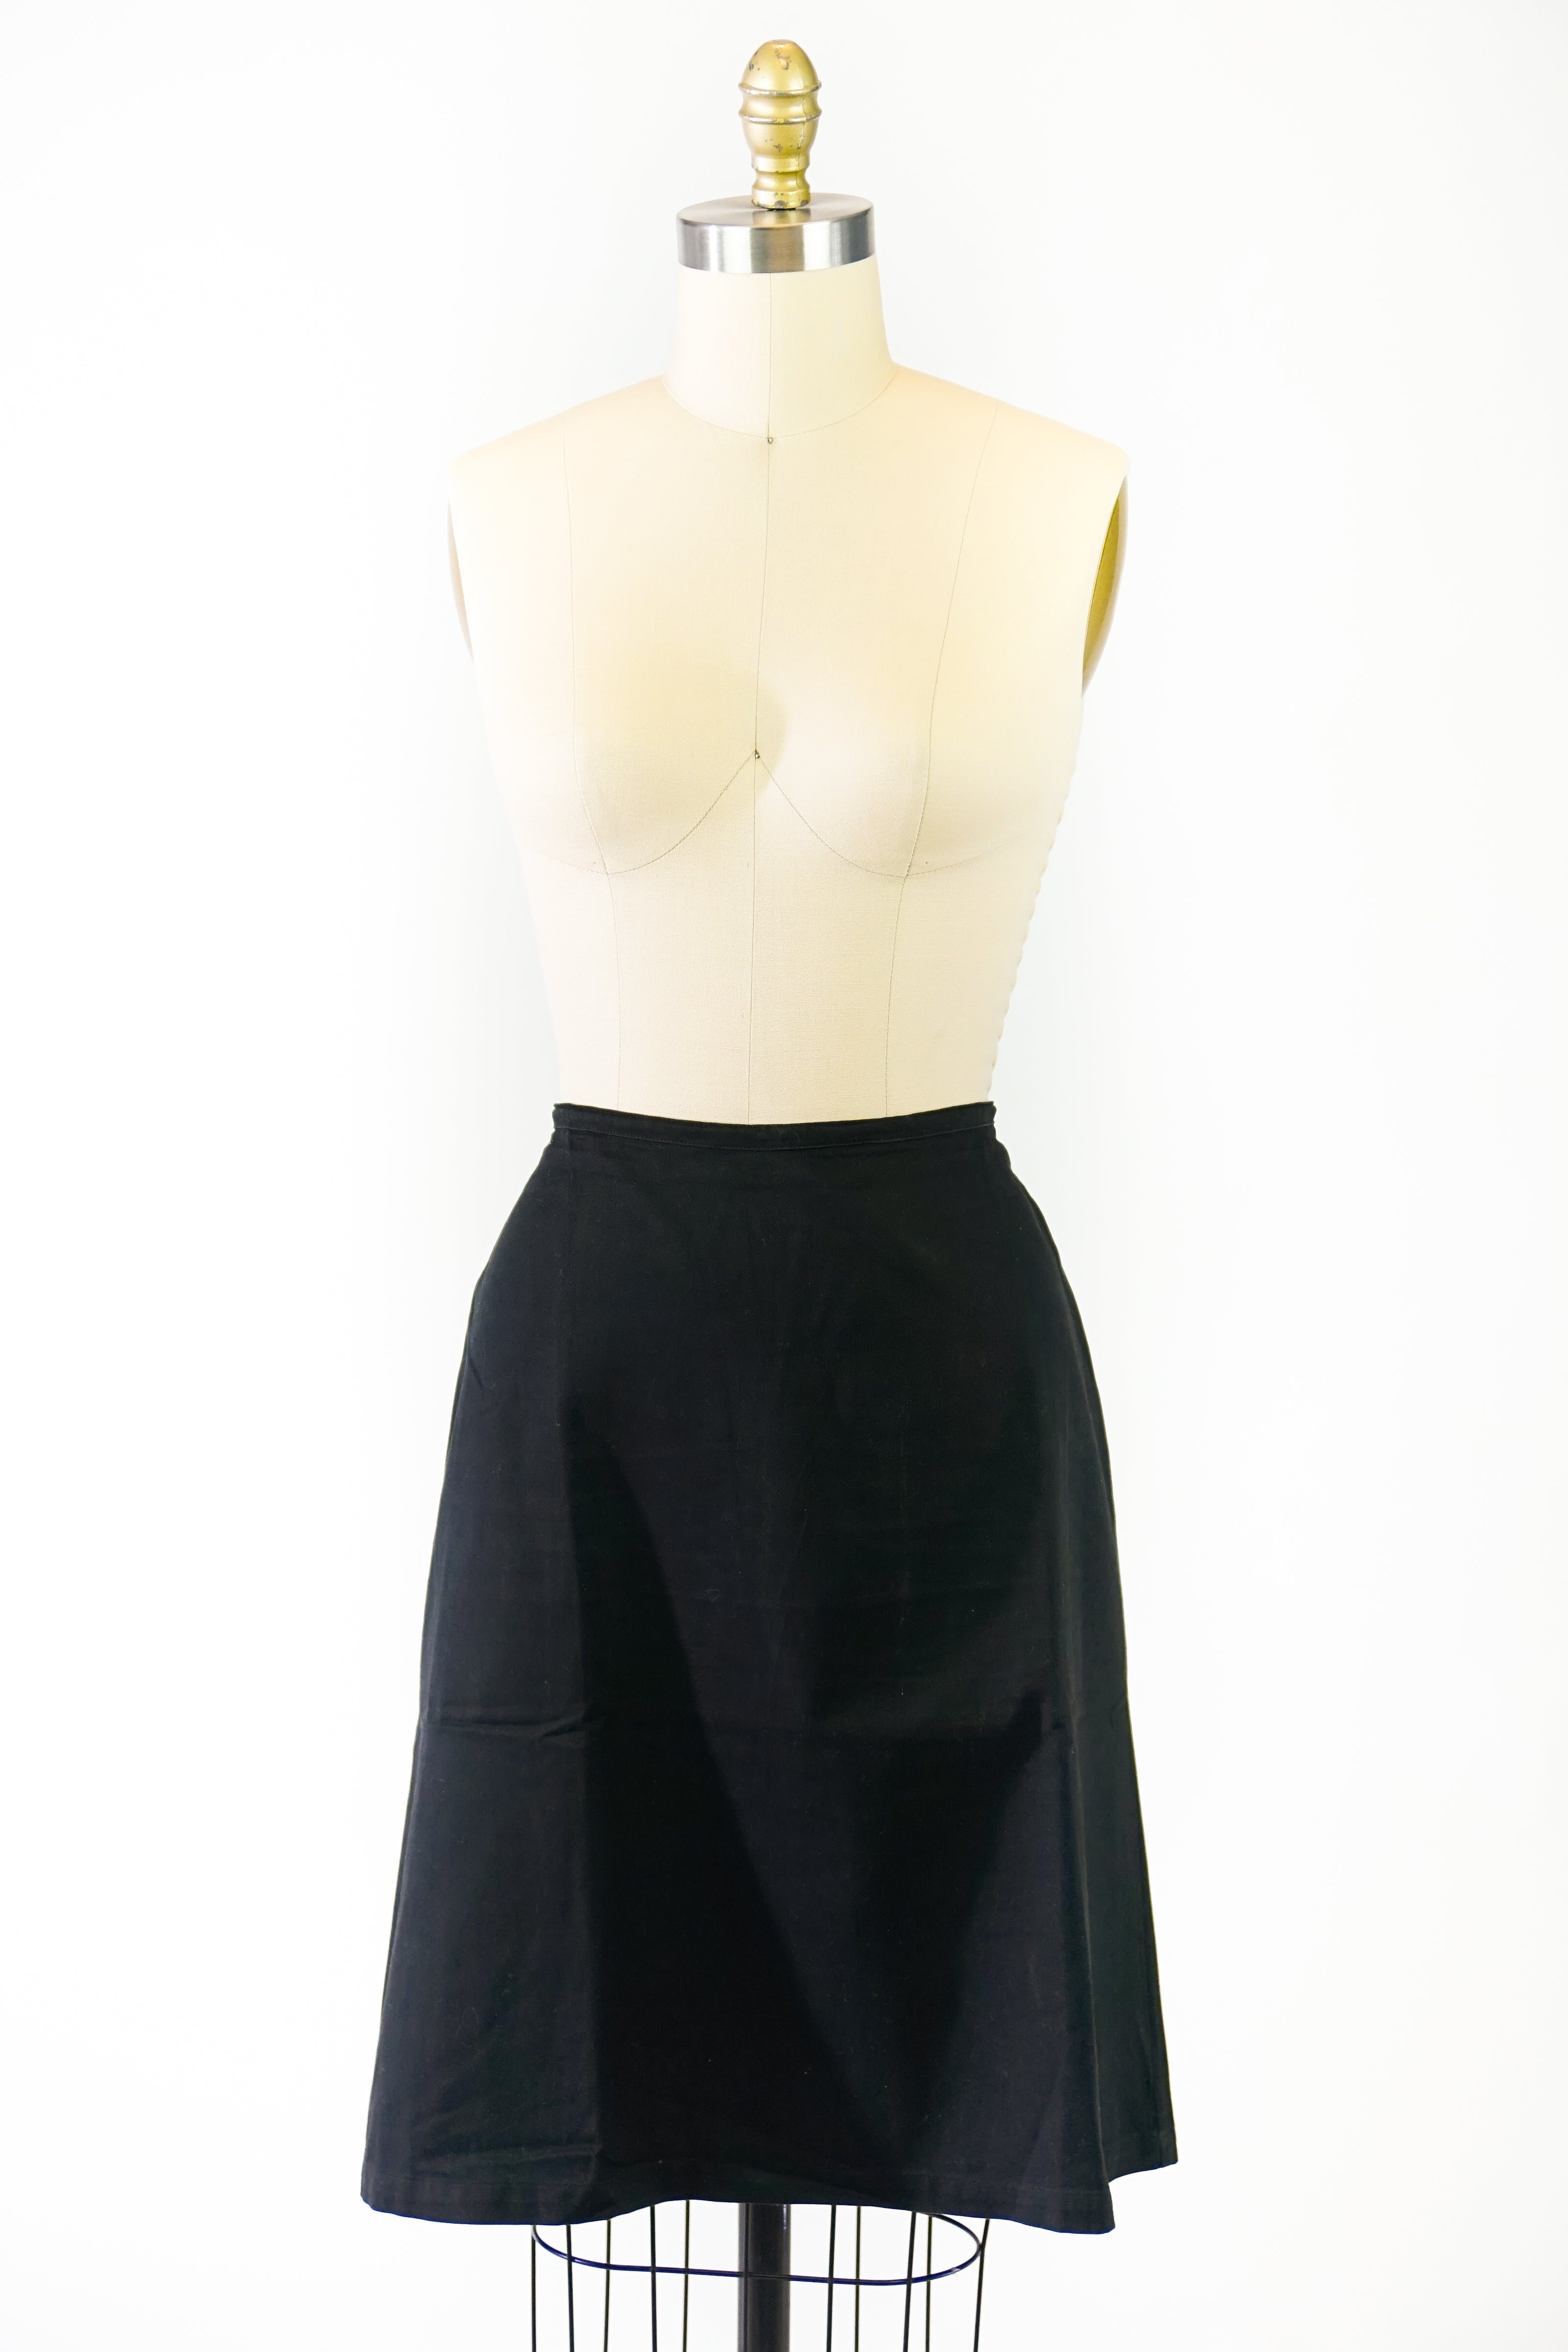 CC Black A-Line Skirt